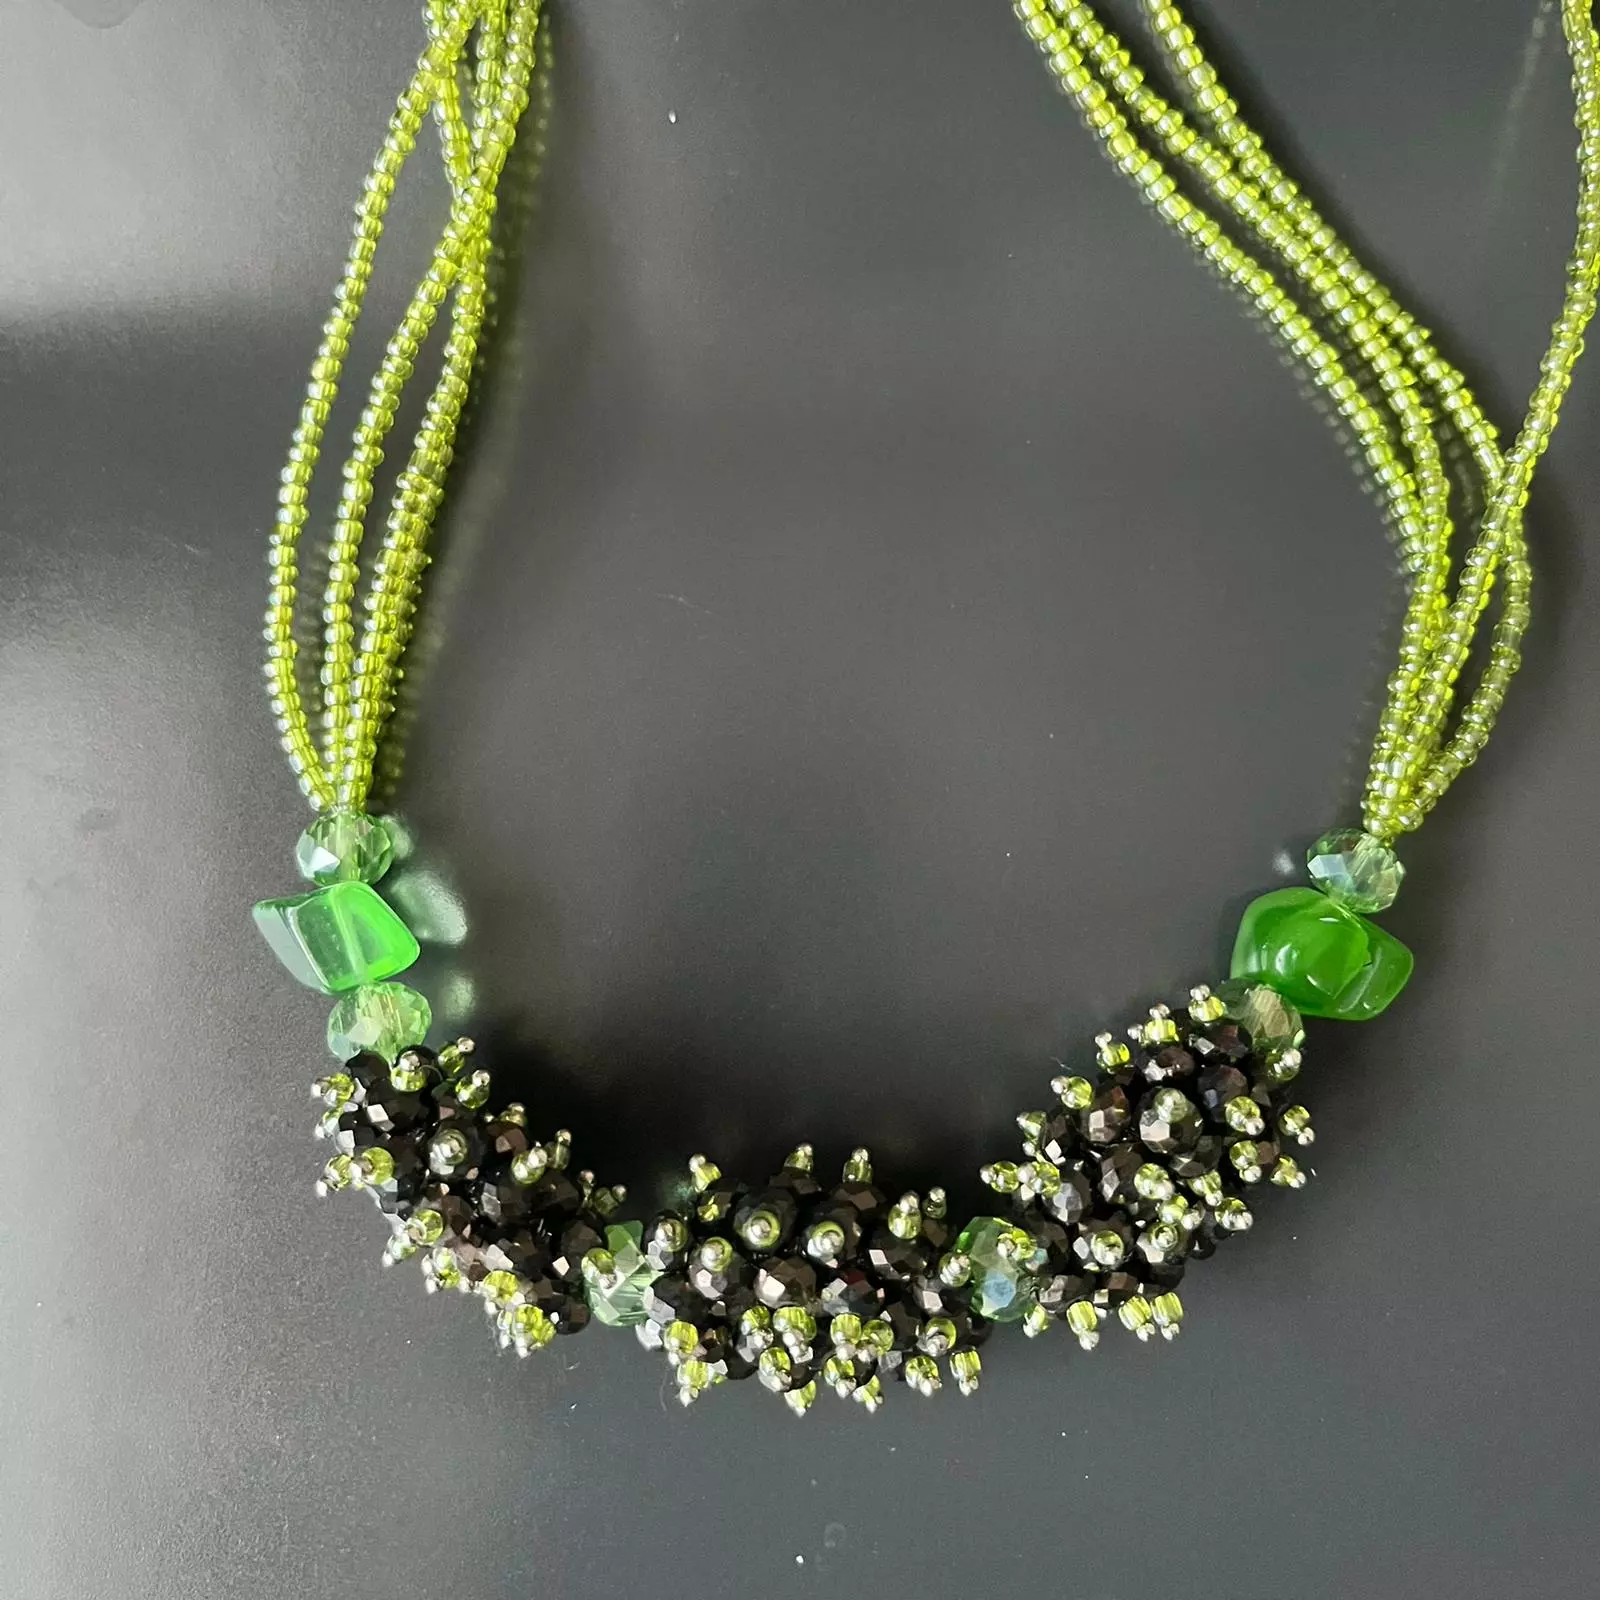 Handmade bead necklace